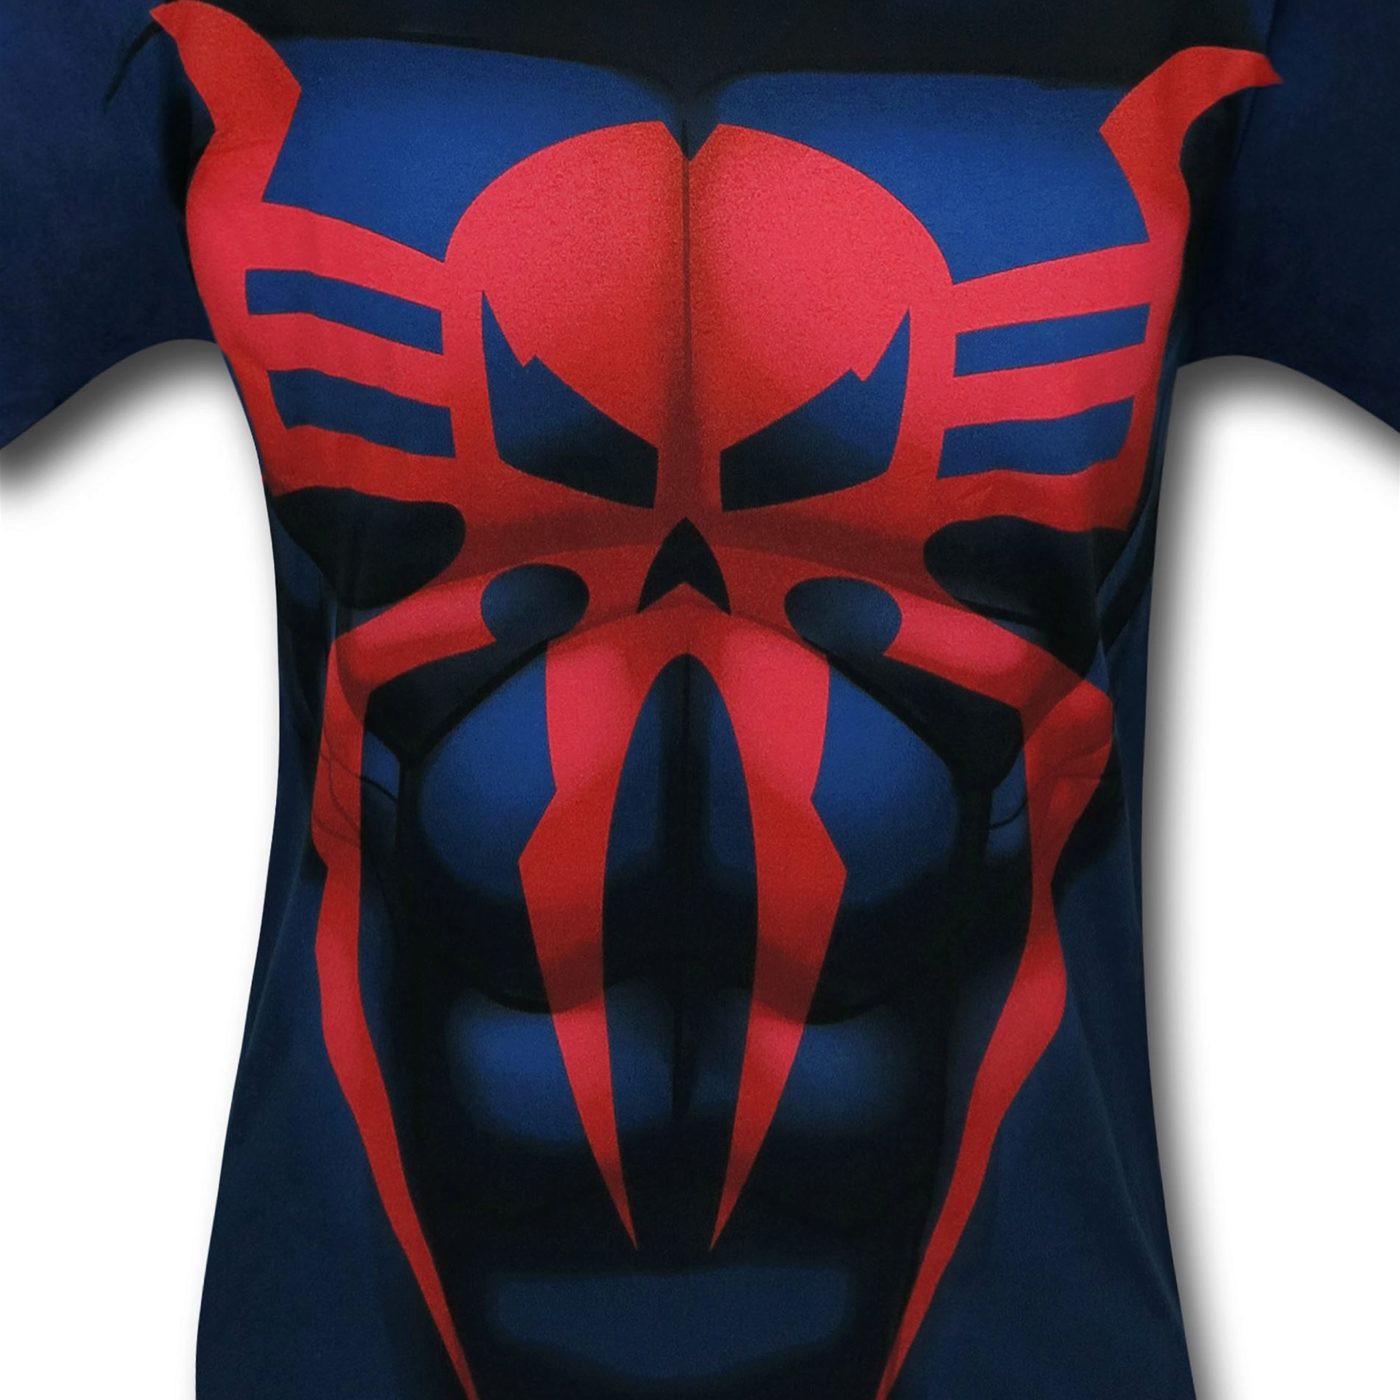 Spiderman 2099 30 Single Costume T-Shirt